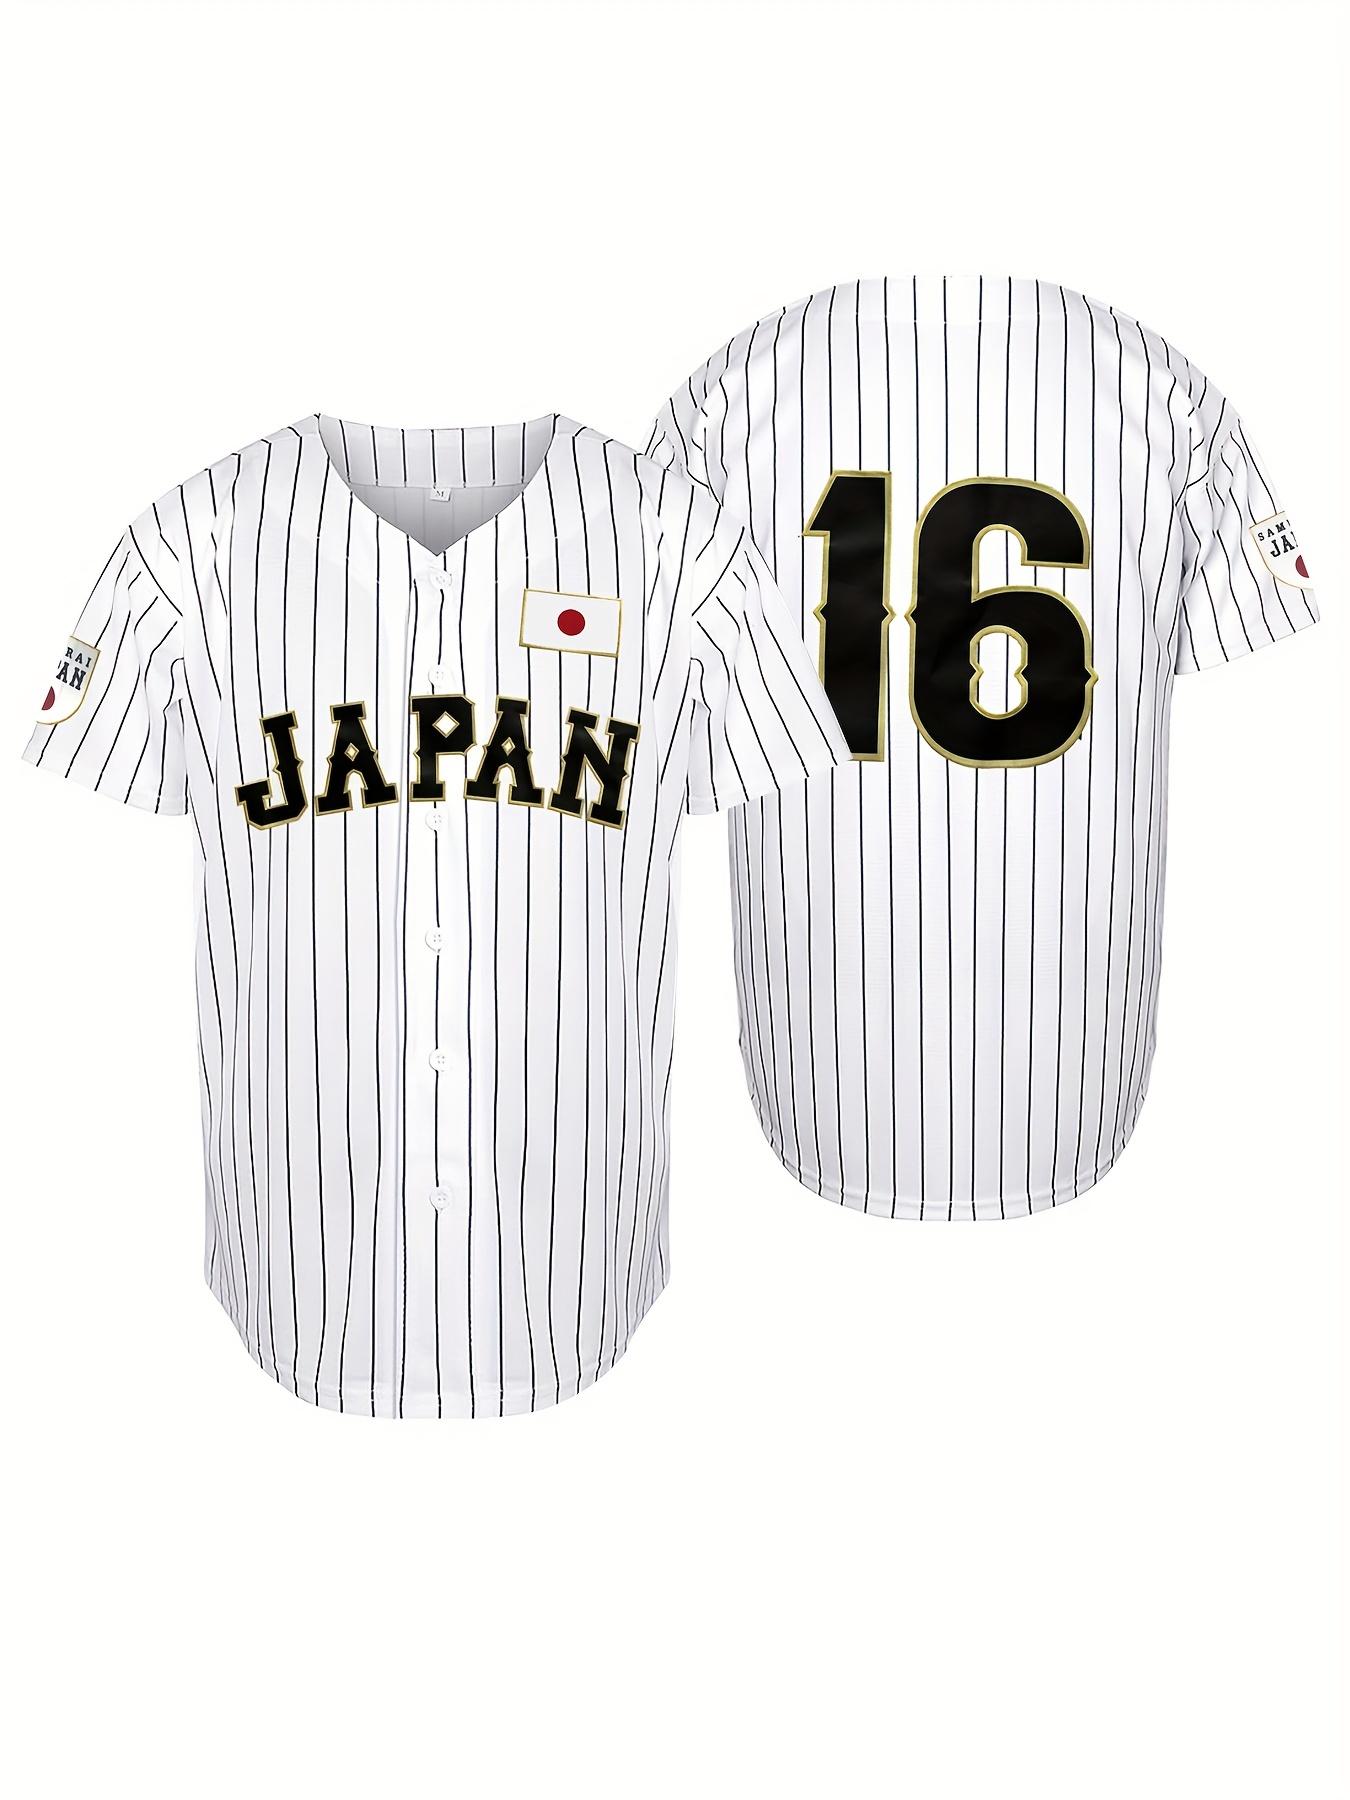 Buy Men's #16 Ohtani Japan Samurai White Black Pinstriped Hip Hop Baseball  Jersey, Black, XX-Large at